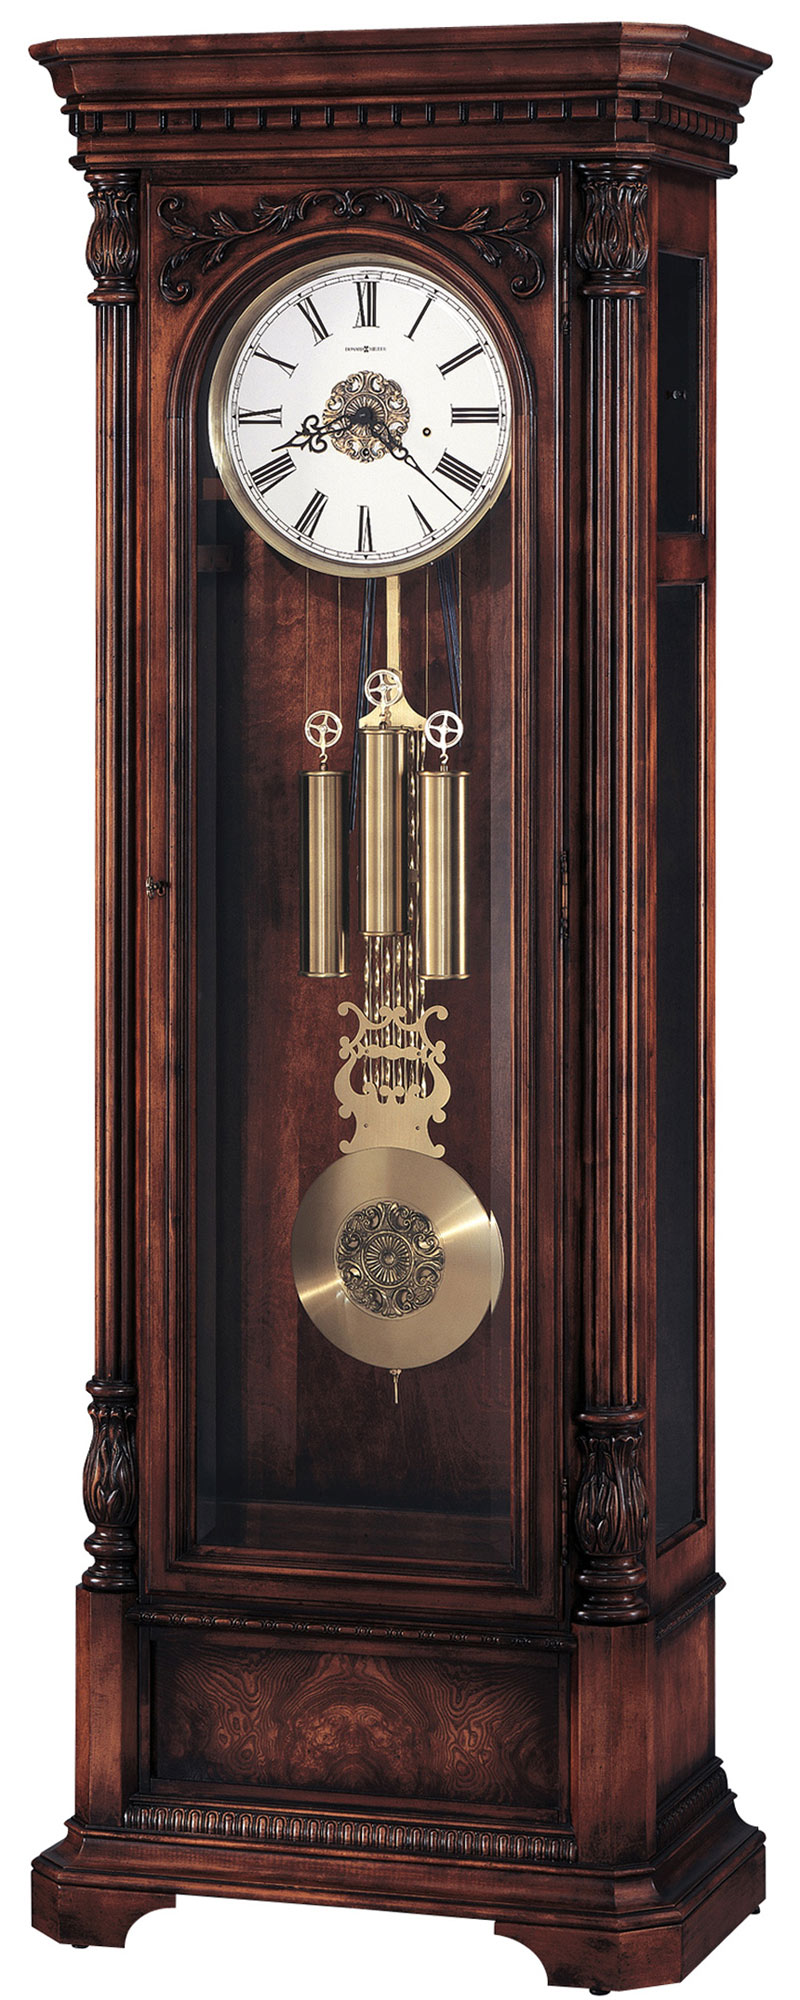 Trieste Grandfather Clock by Howard Miller